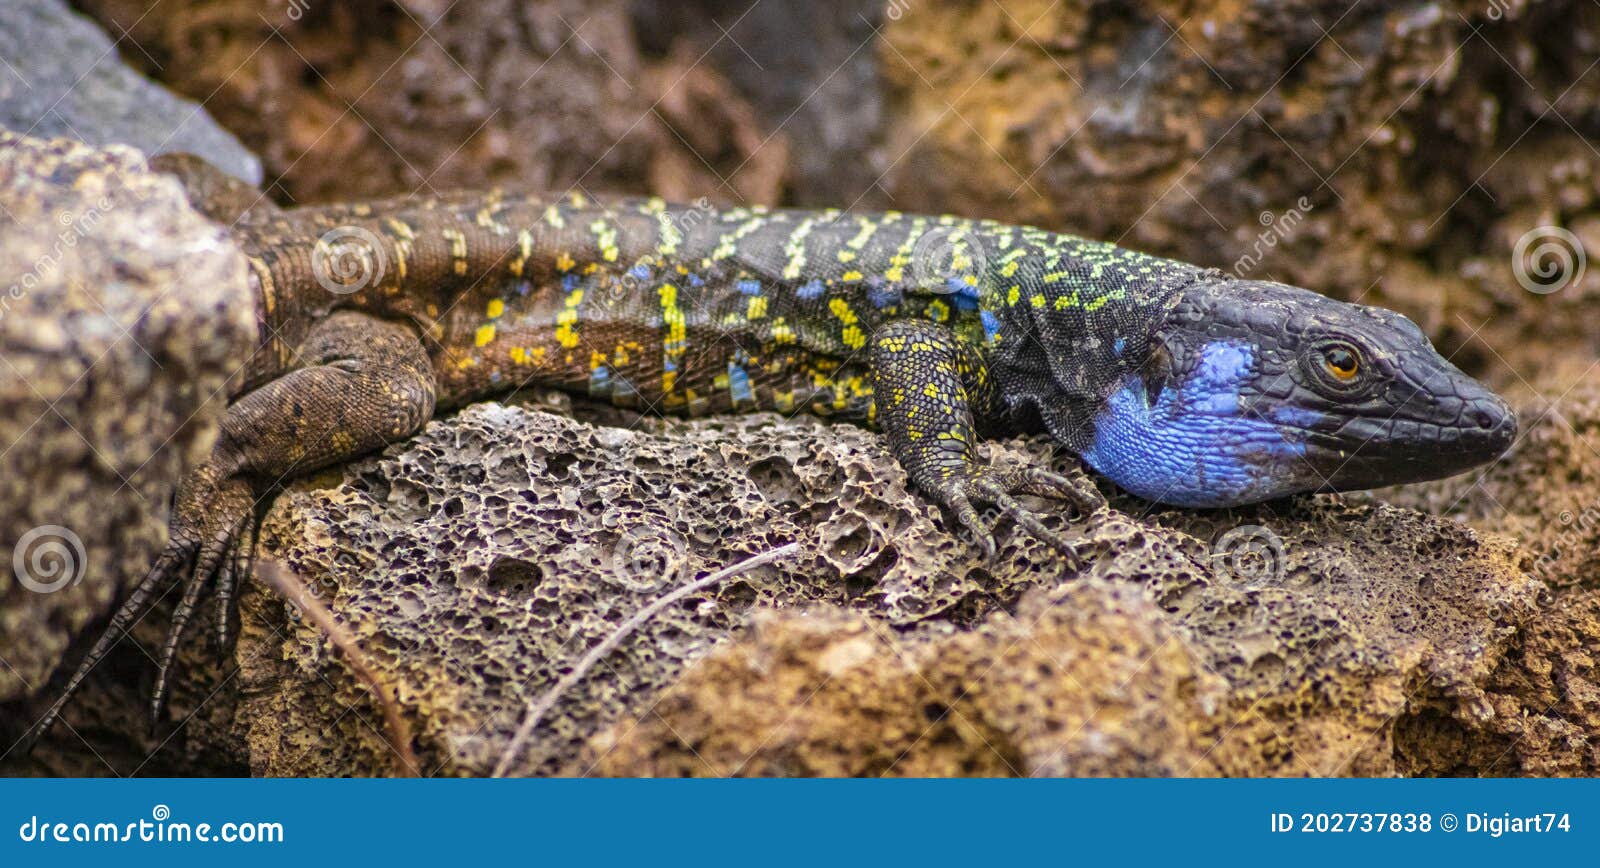 canarian lizard - lagarto tizon - between the rocks